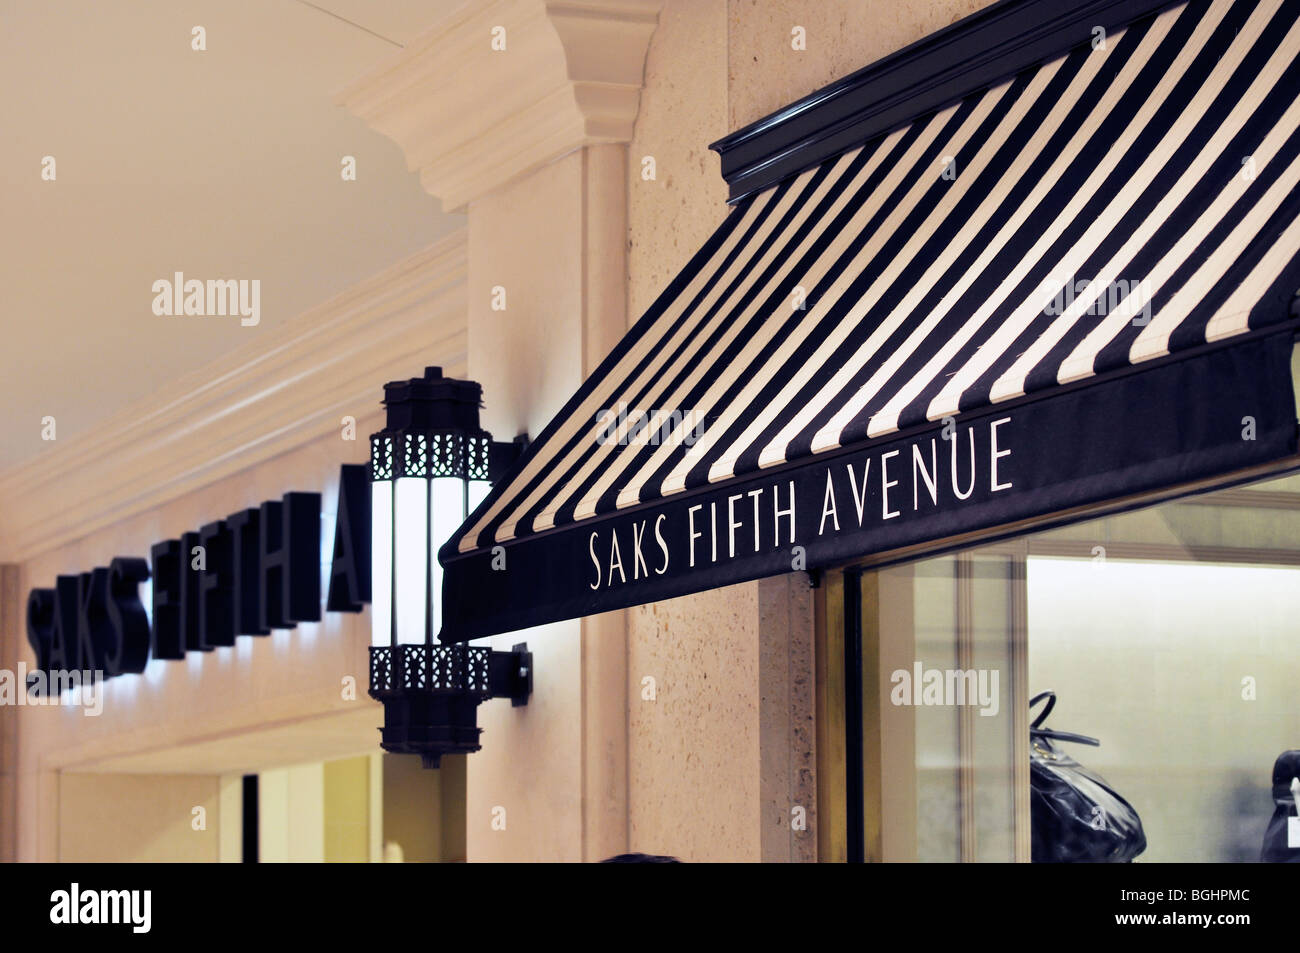 Saks Fifth Avenue store Stock Photo - Alamy